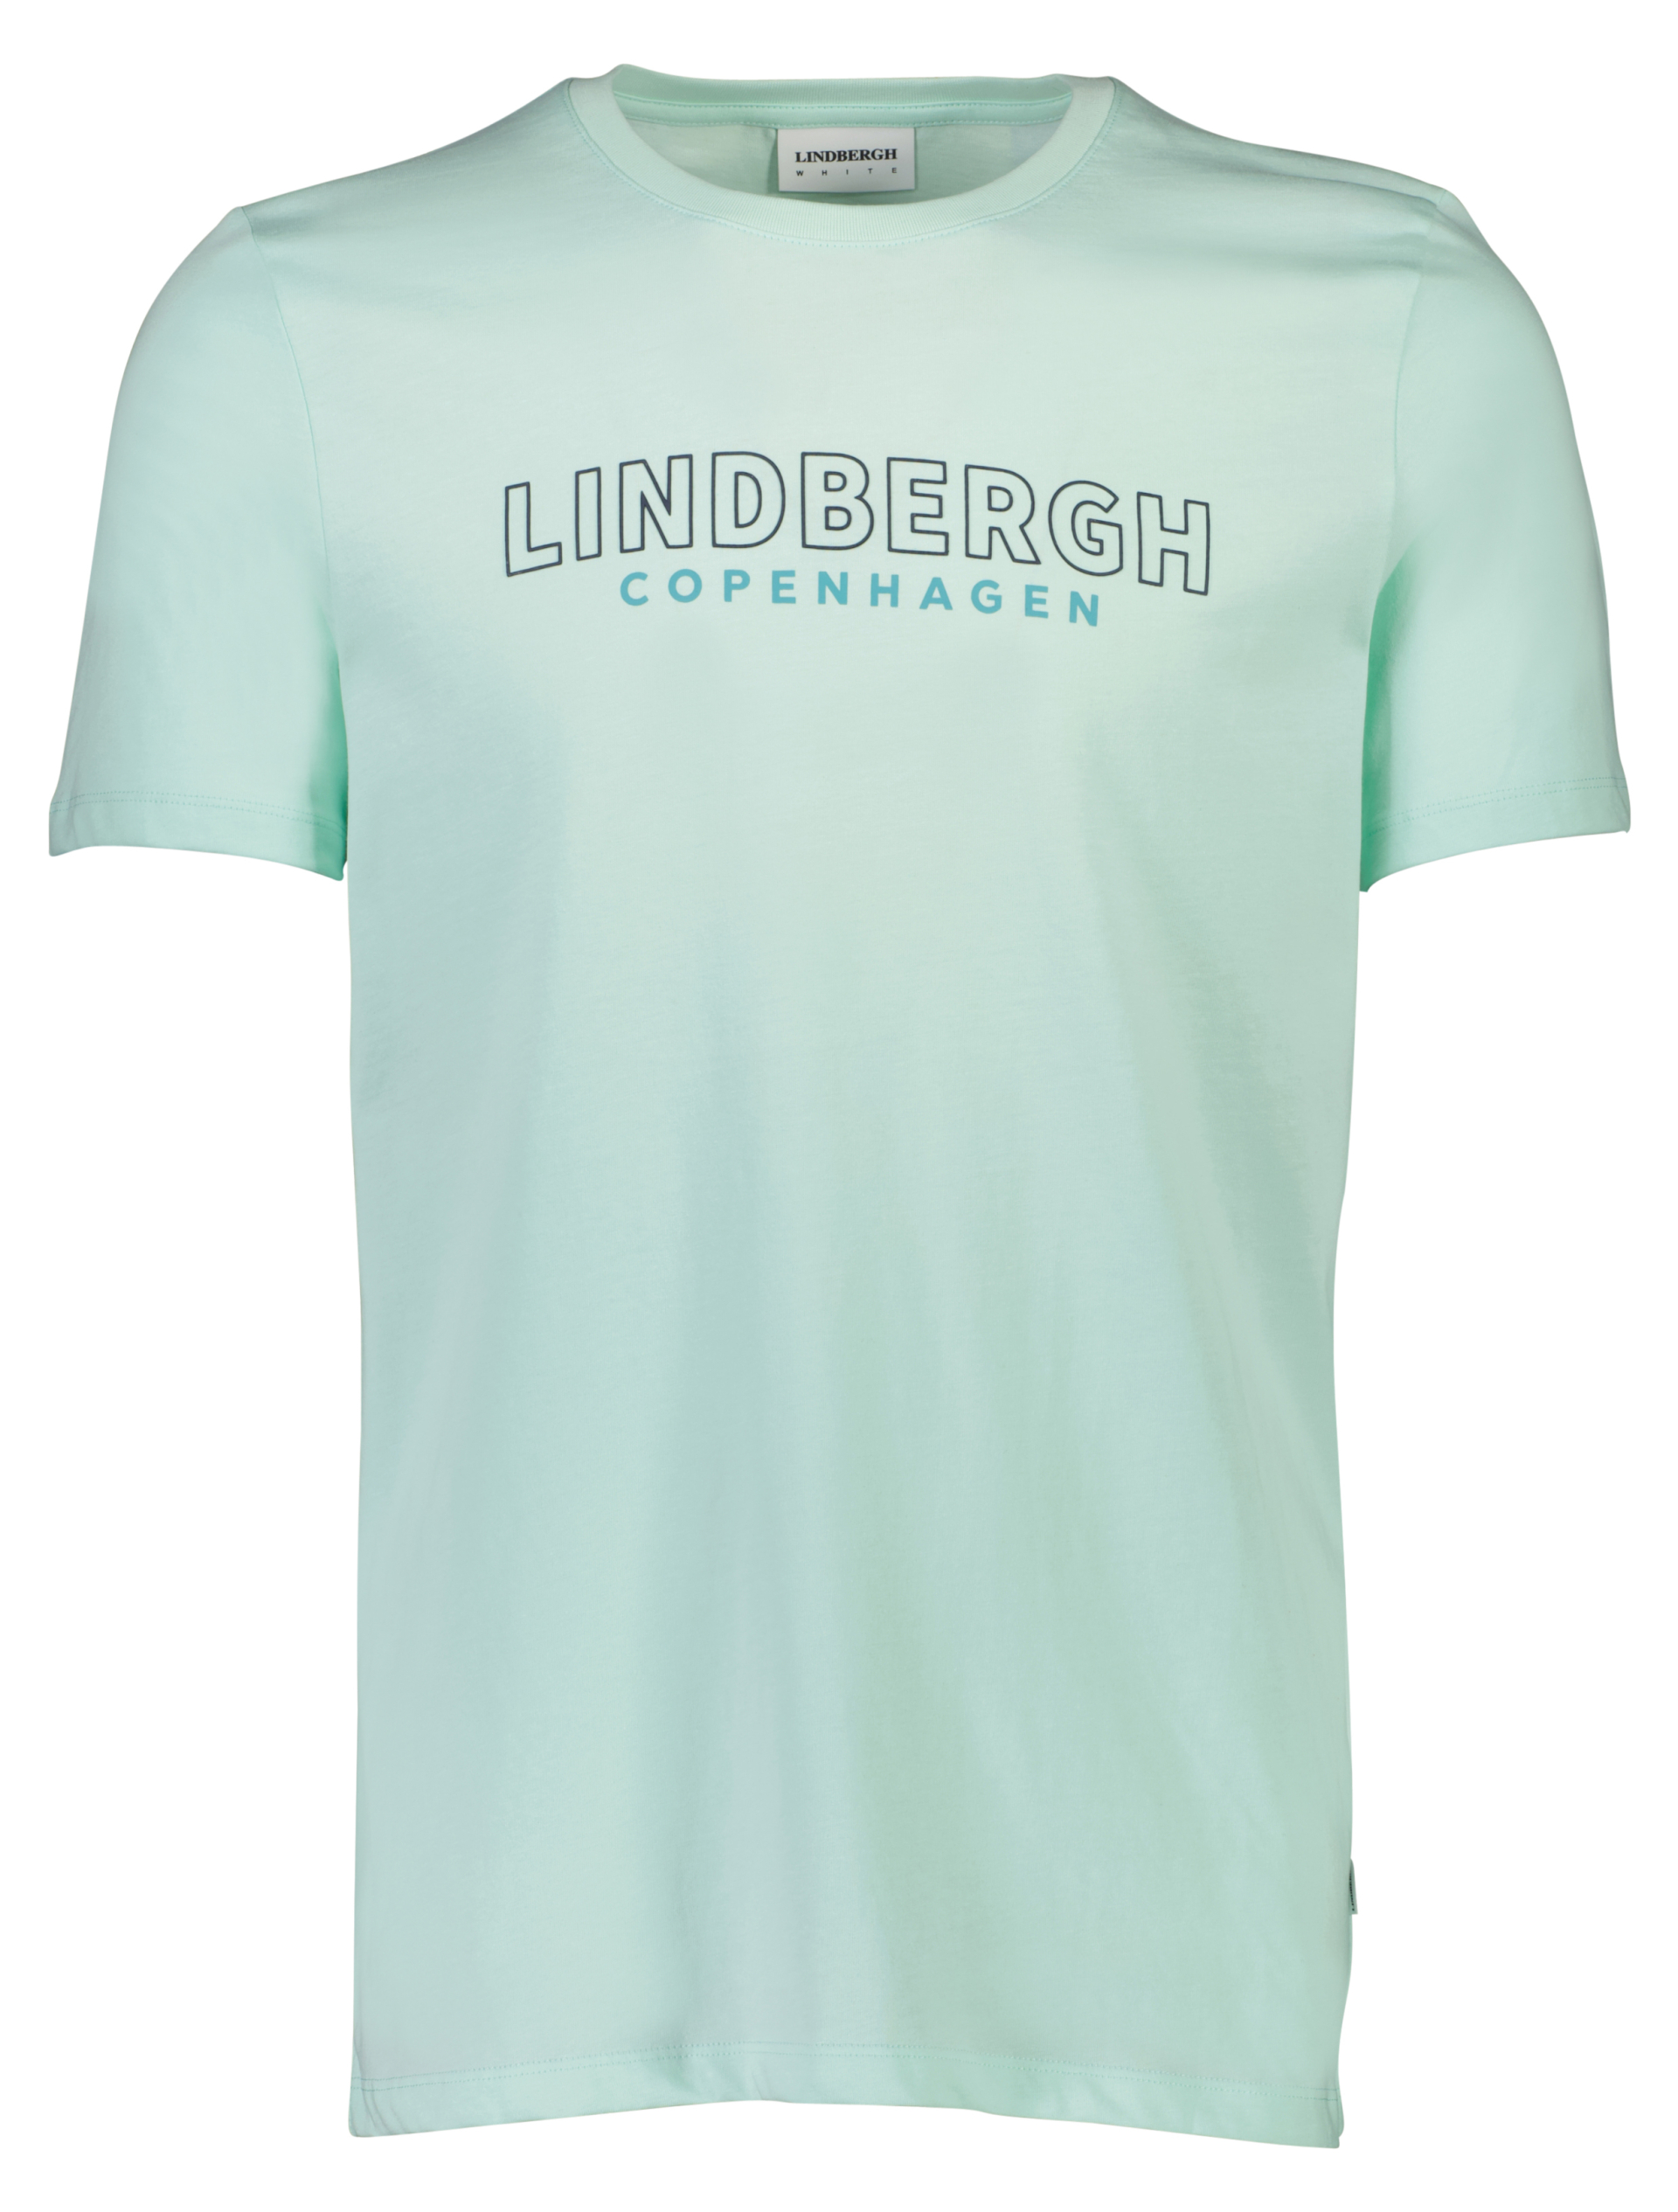 Lindbergh Tee green / mint